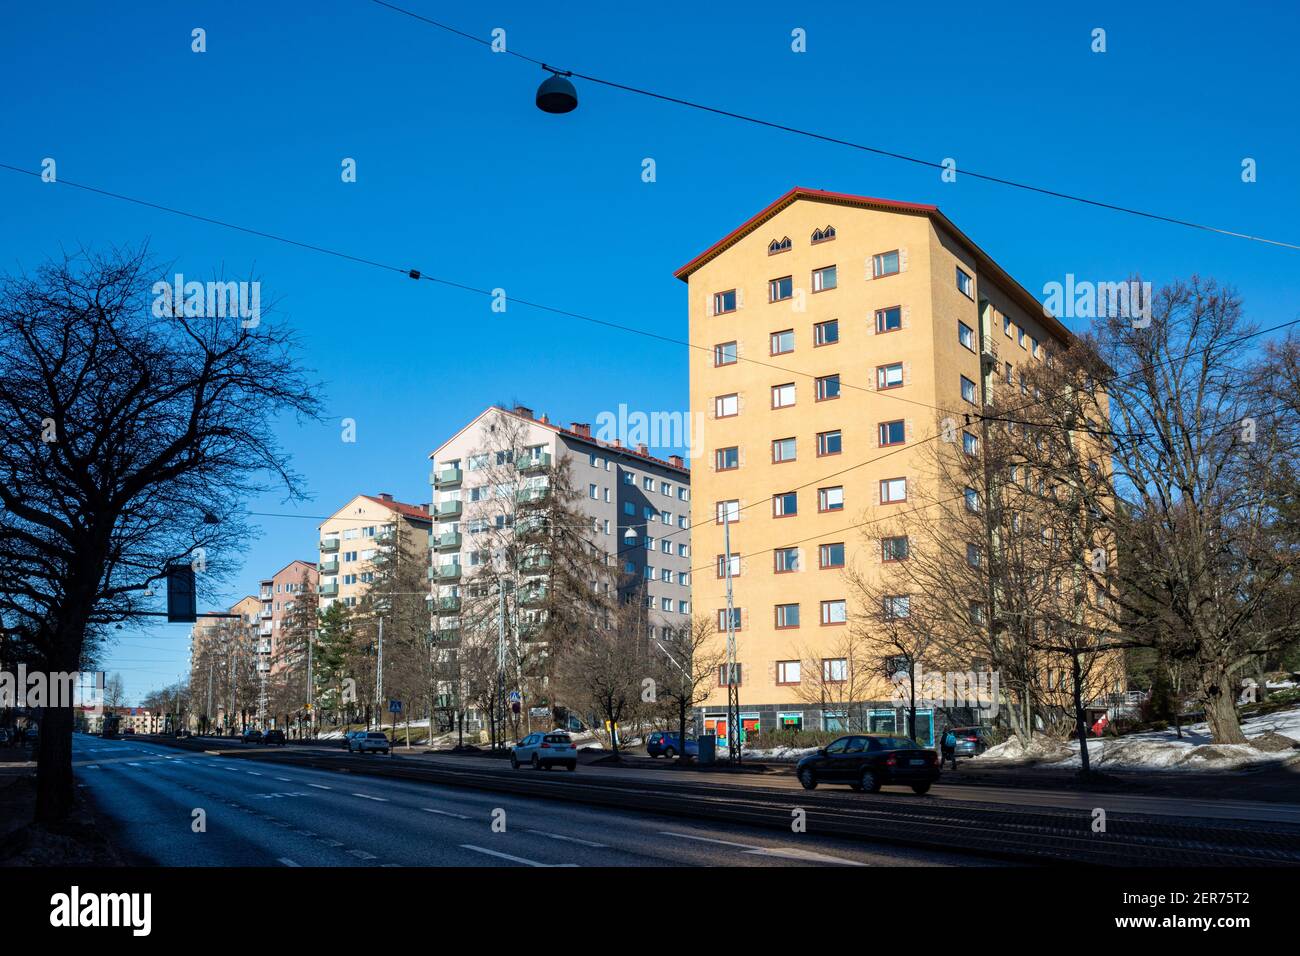 Residential buildings along Mannerheimintie in Tullinpuomi district of Helsinki, Finland Stock Photo